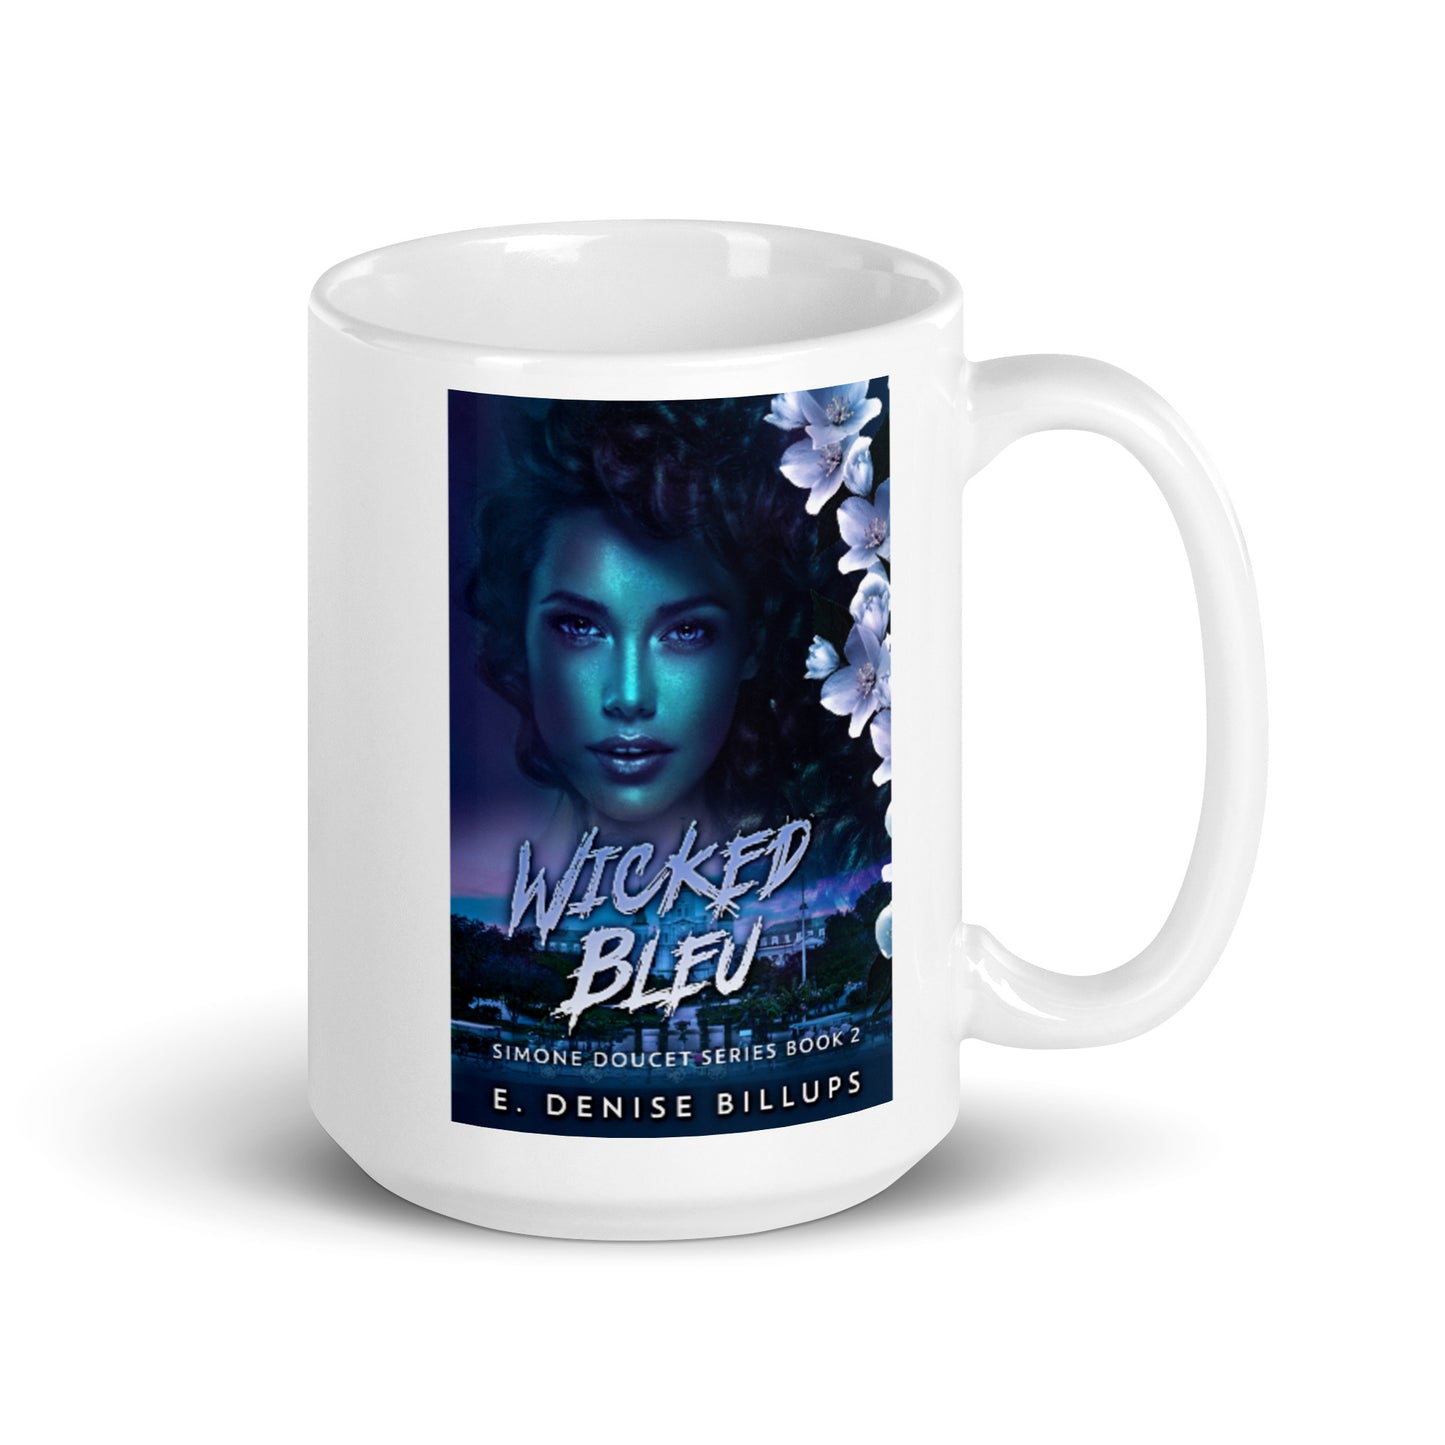 Wicked Bleu - White Coffee Mug